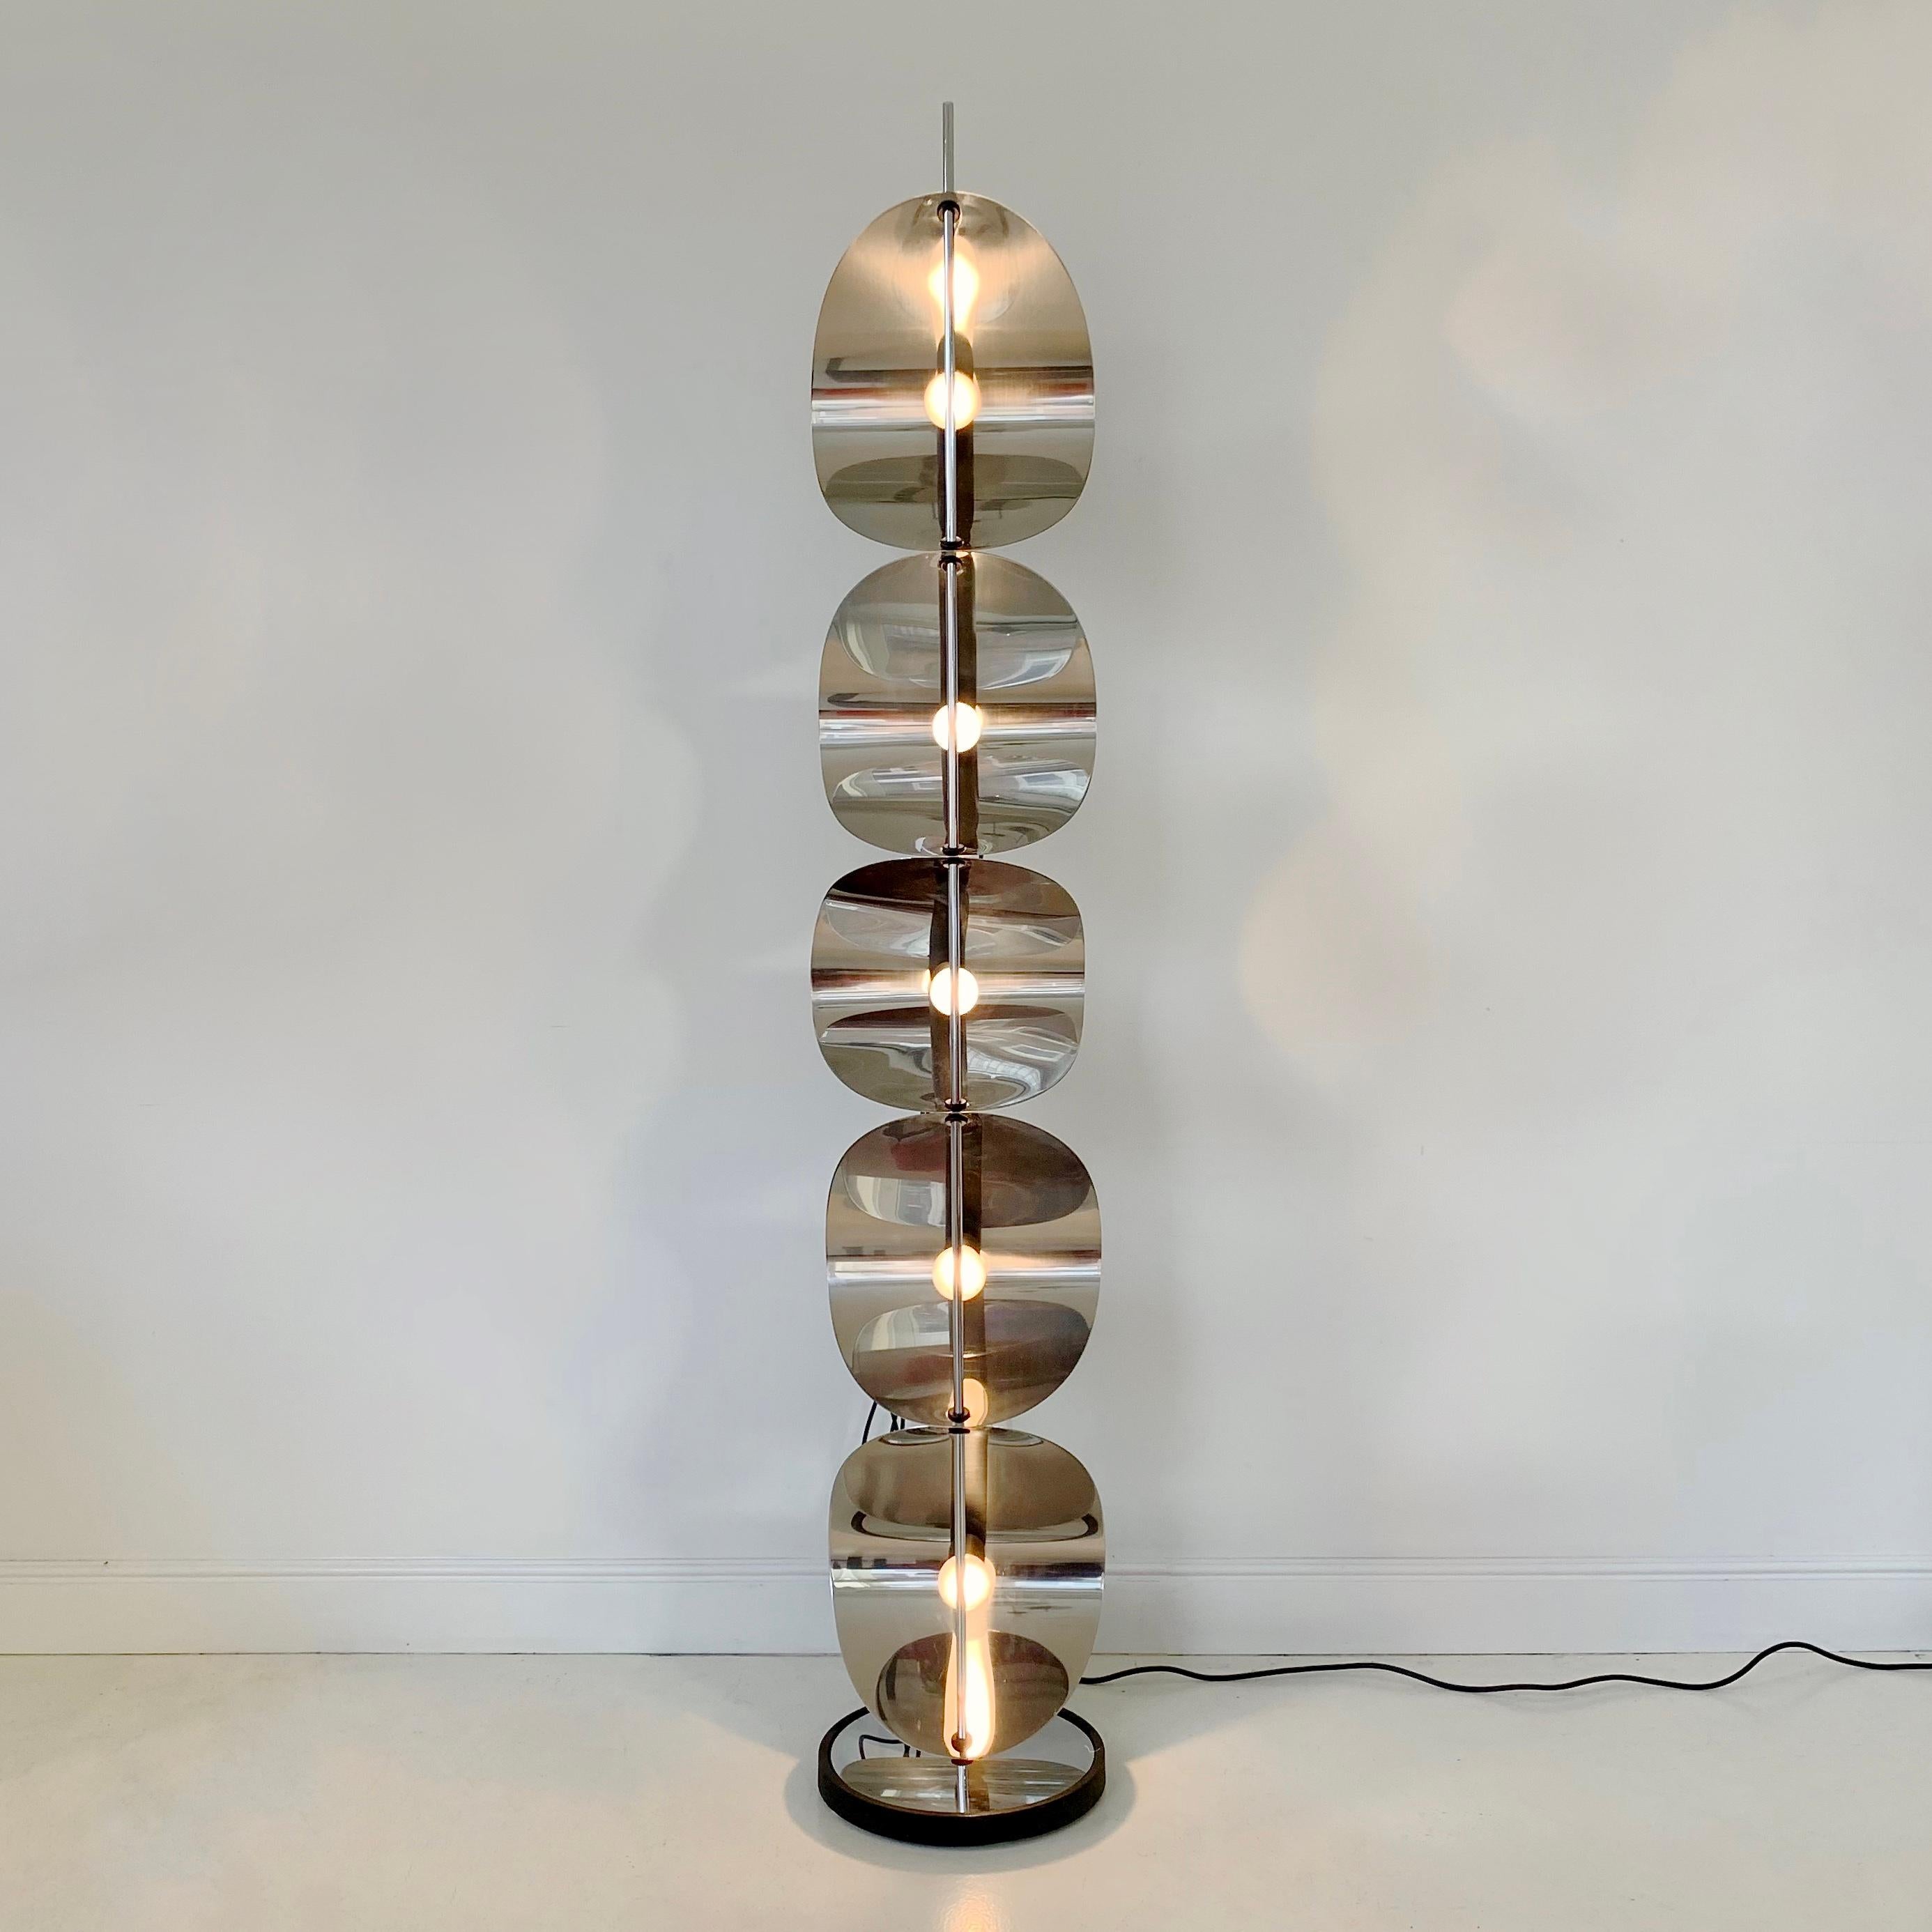 Italian Elica Floor Lamp by Cesare Leonardi & Franca Stagi for Lumenform, 1969, Italy.